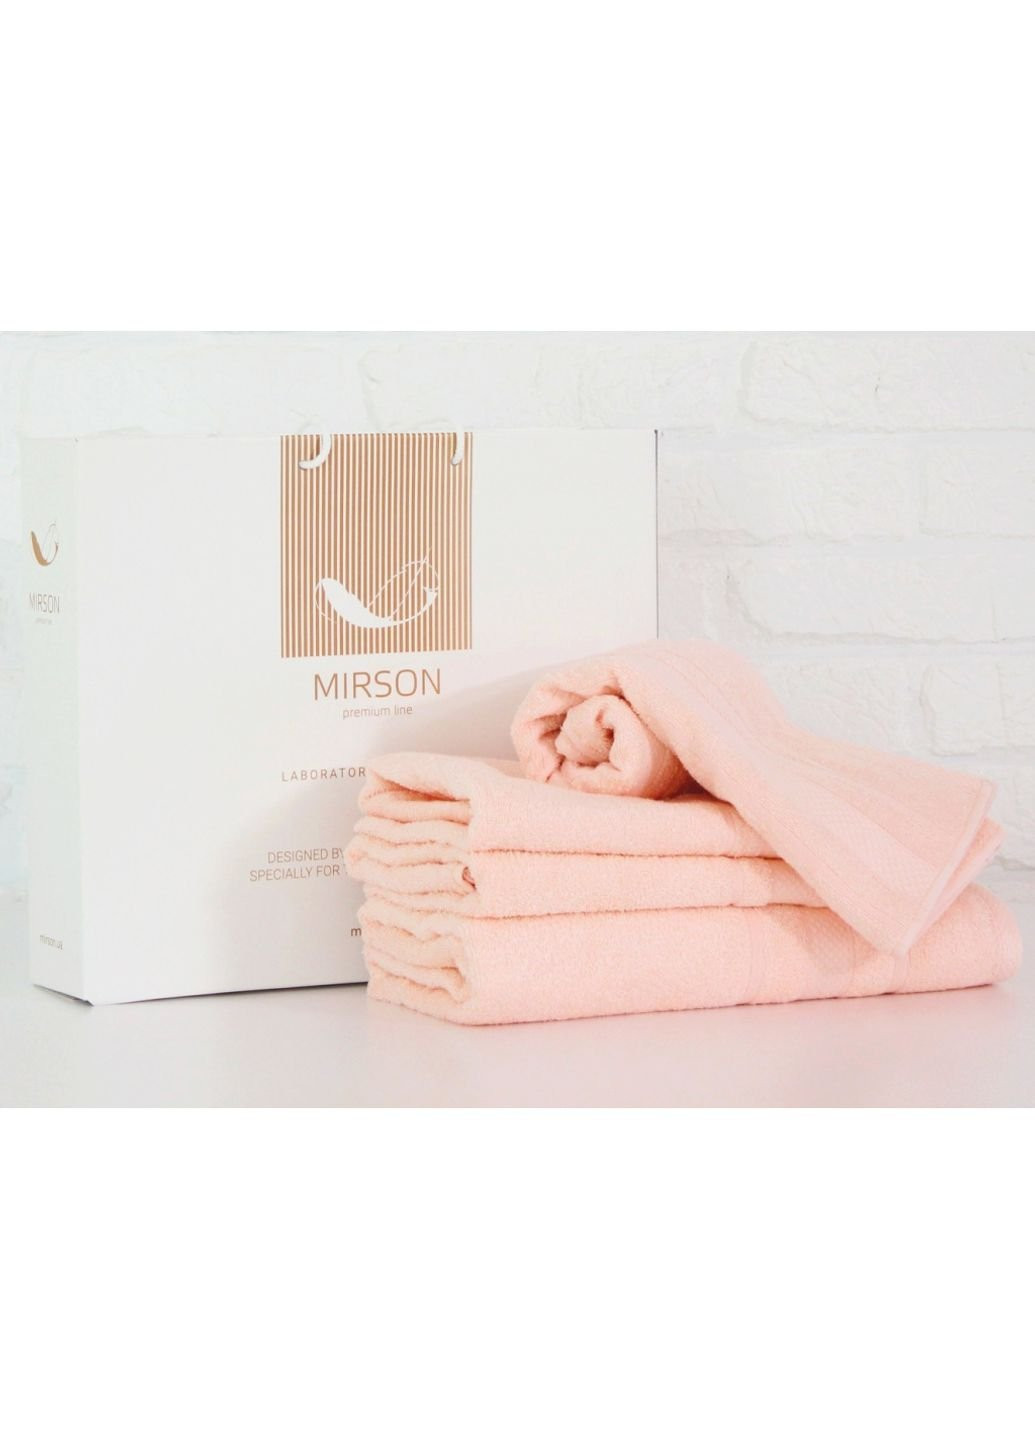 Mirson полотенце набор банных №5080 elite softness peach 40х70, 50х90, 70х140 (2200003975727) персиковый производство - Украина